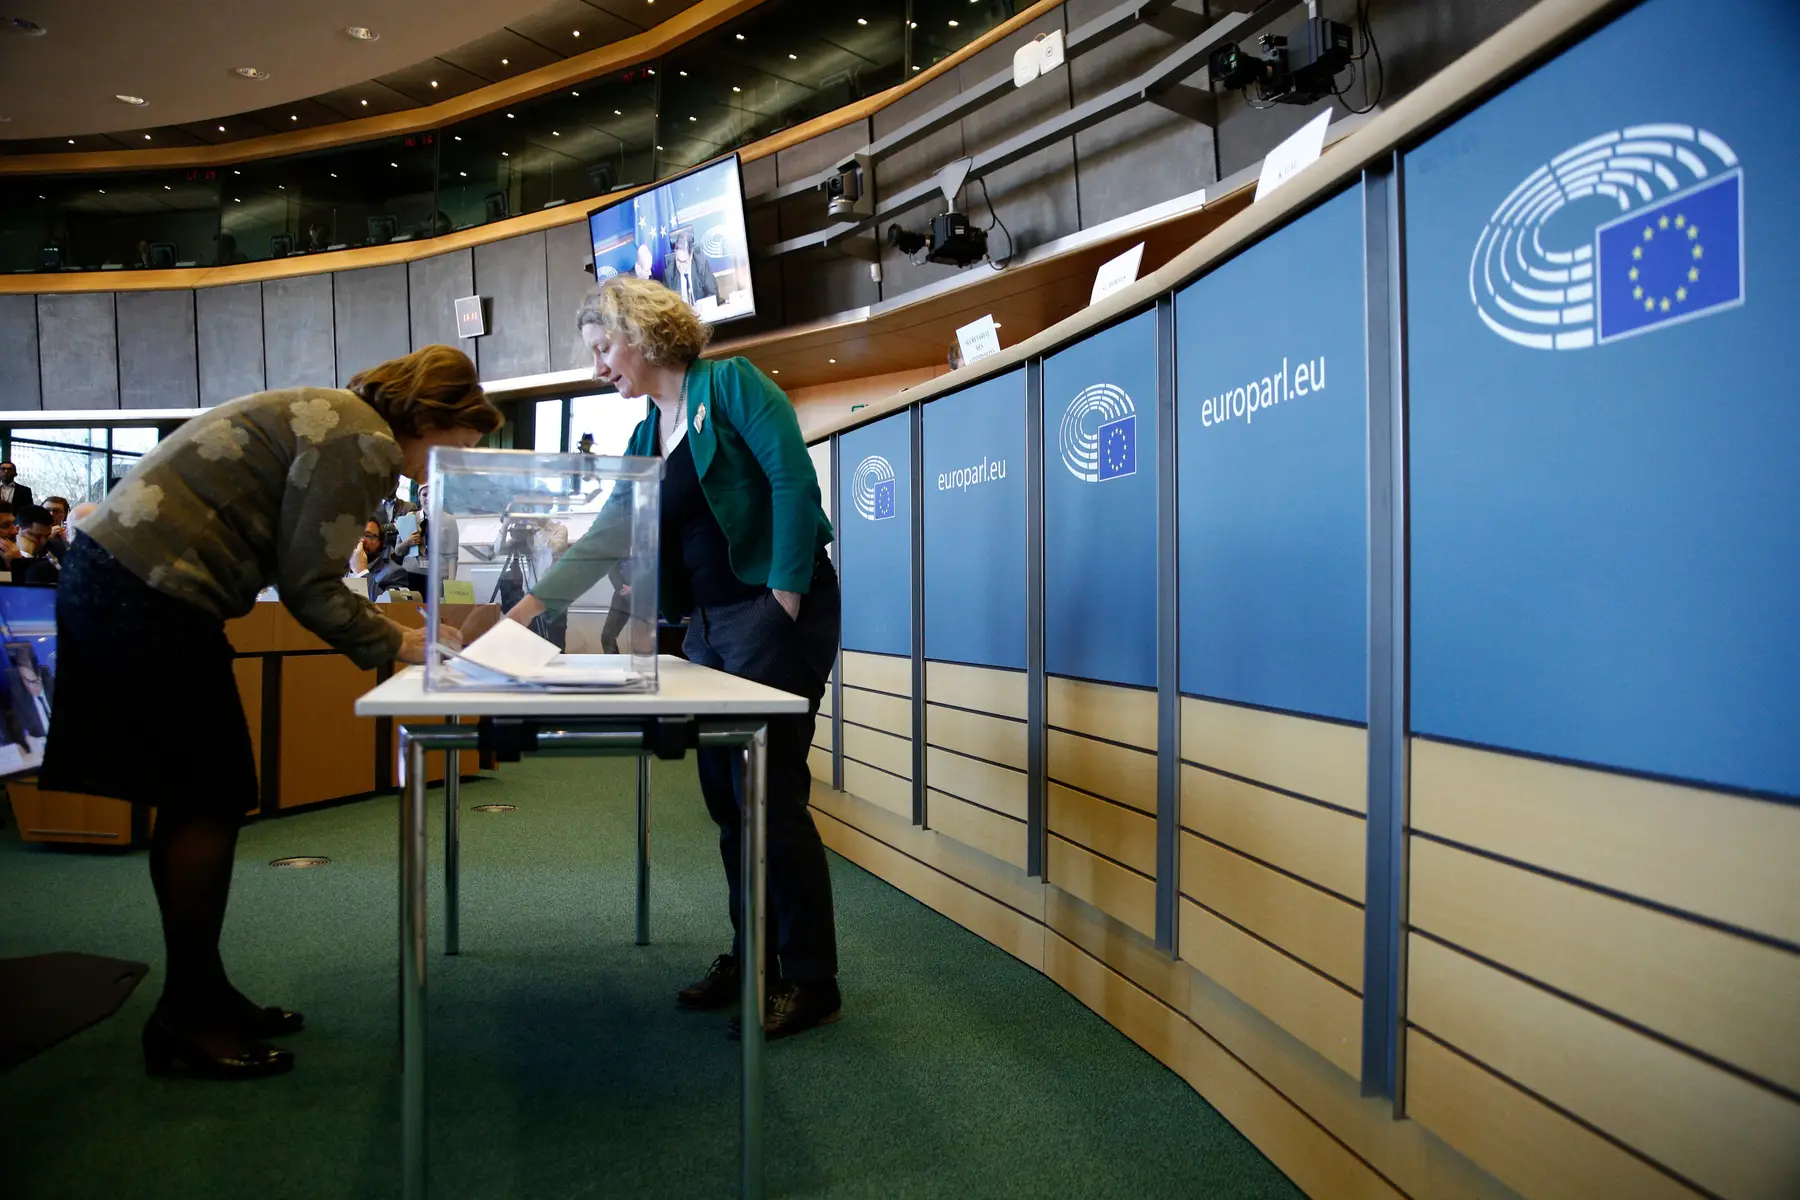 European Parliament ballot casting